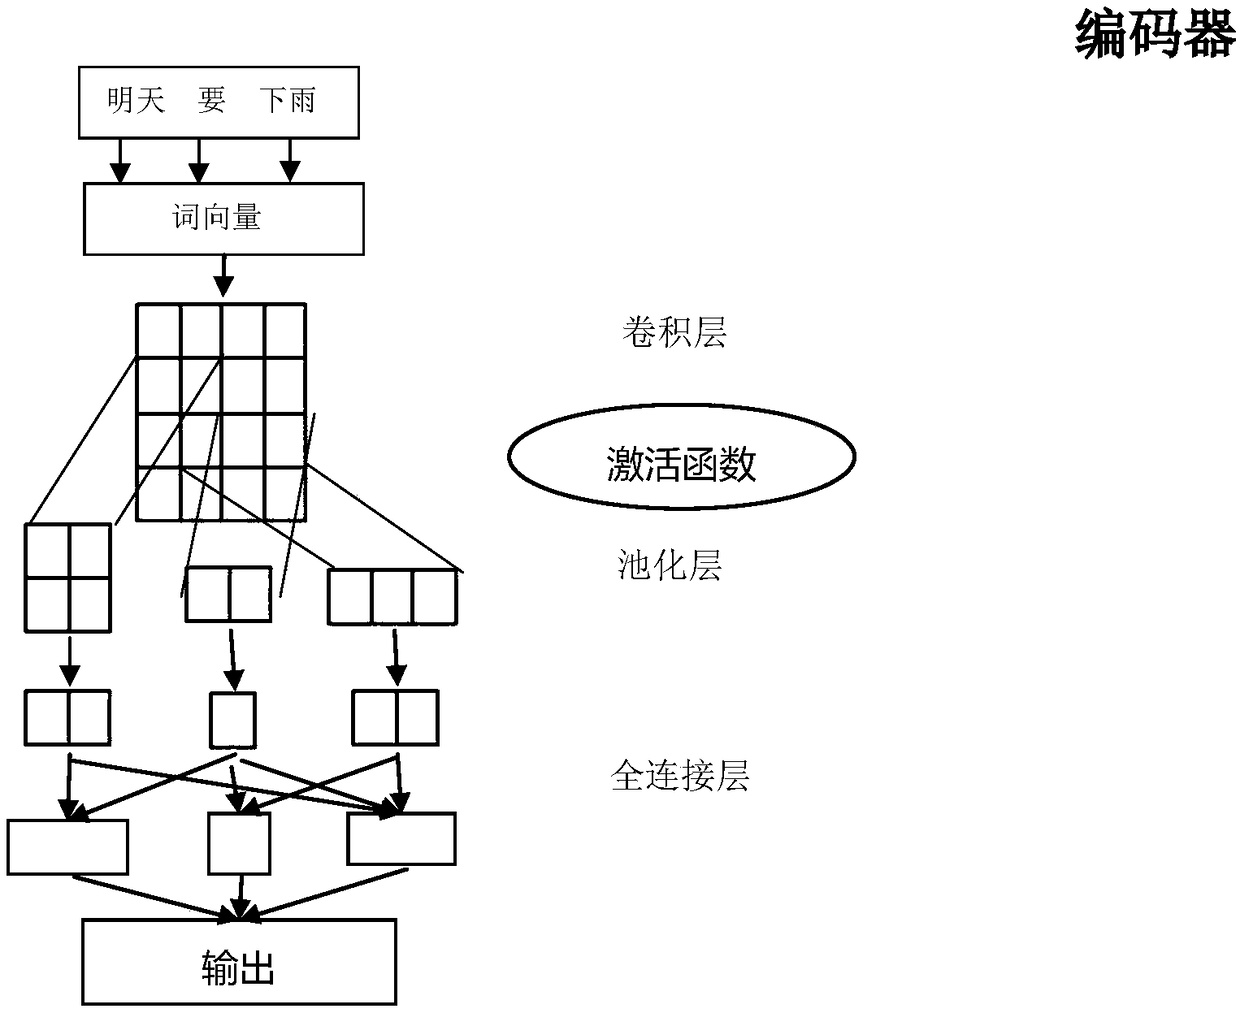 A Mongolian-Chinese machine translation method based on anti-neural network